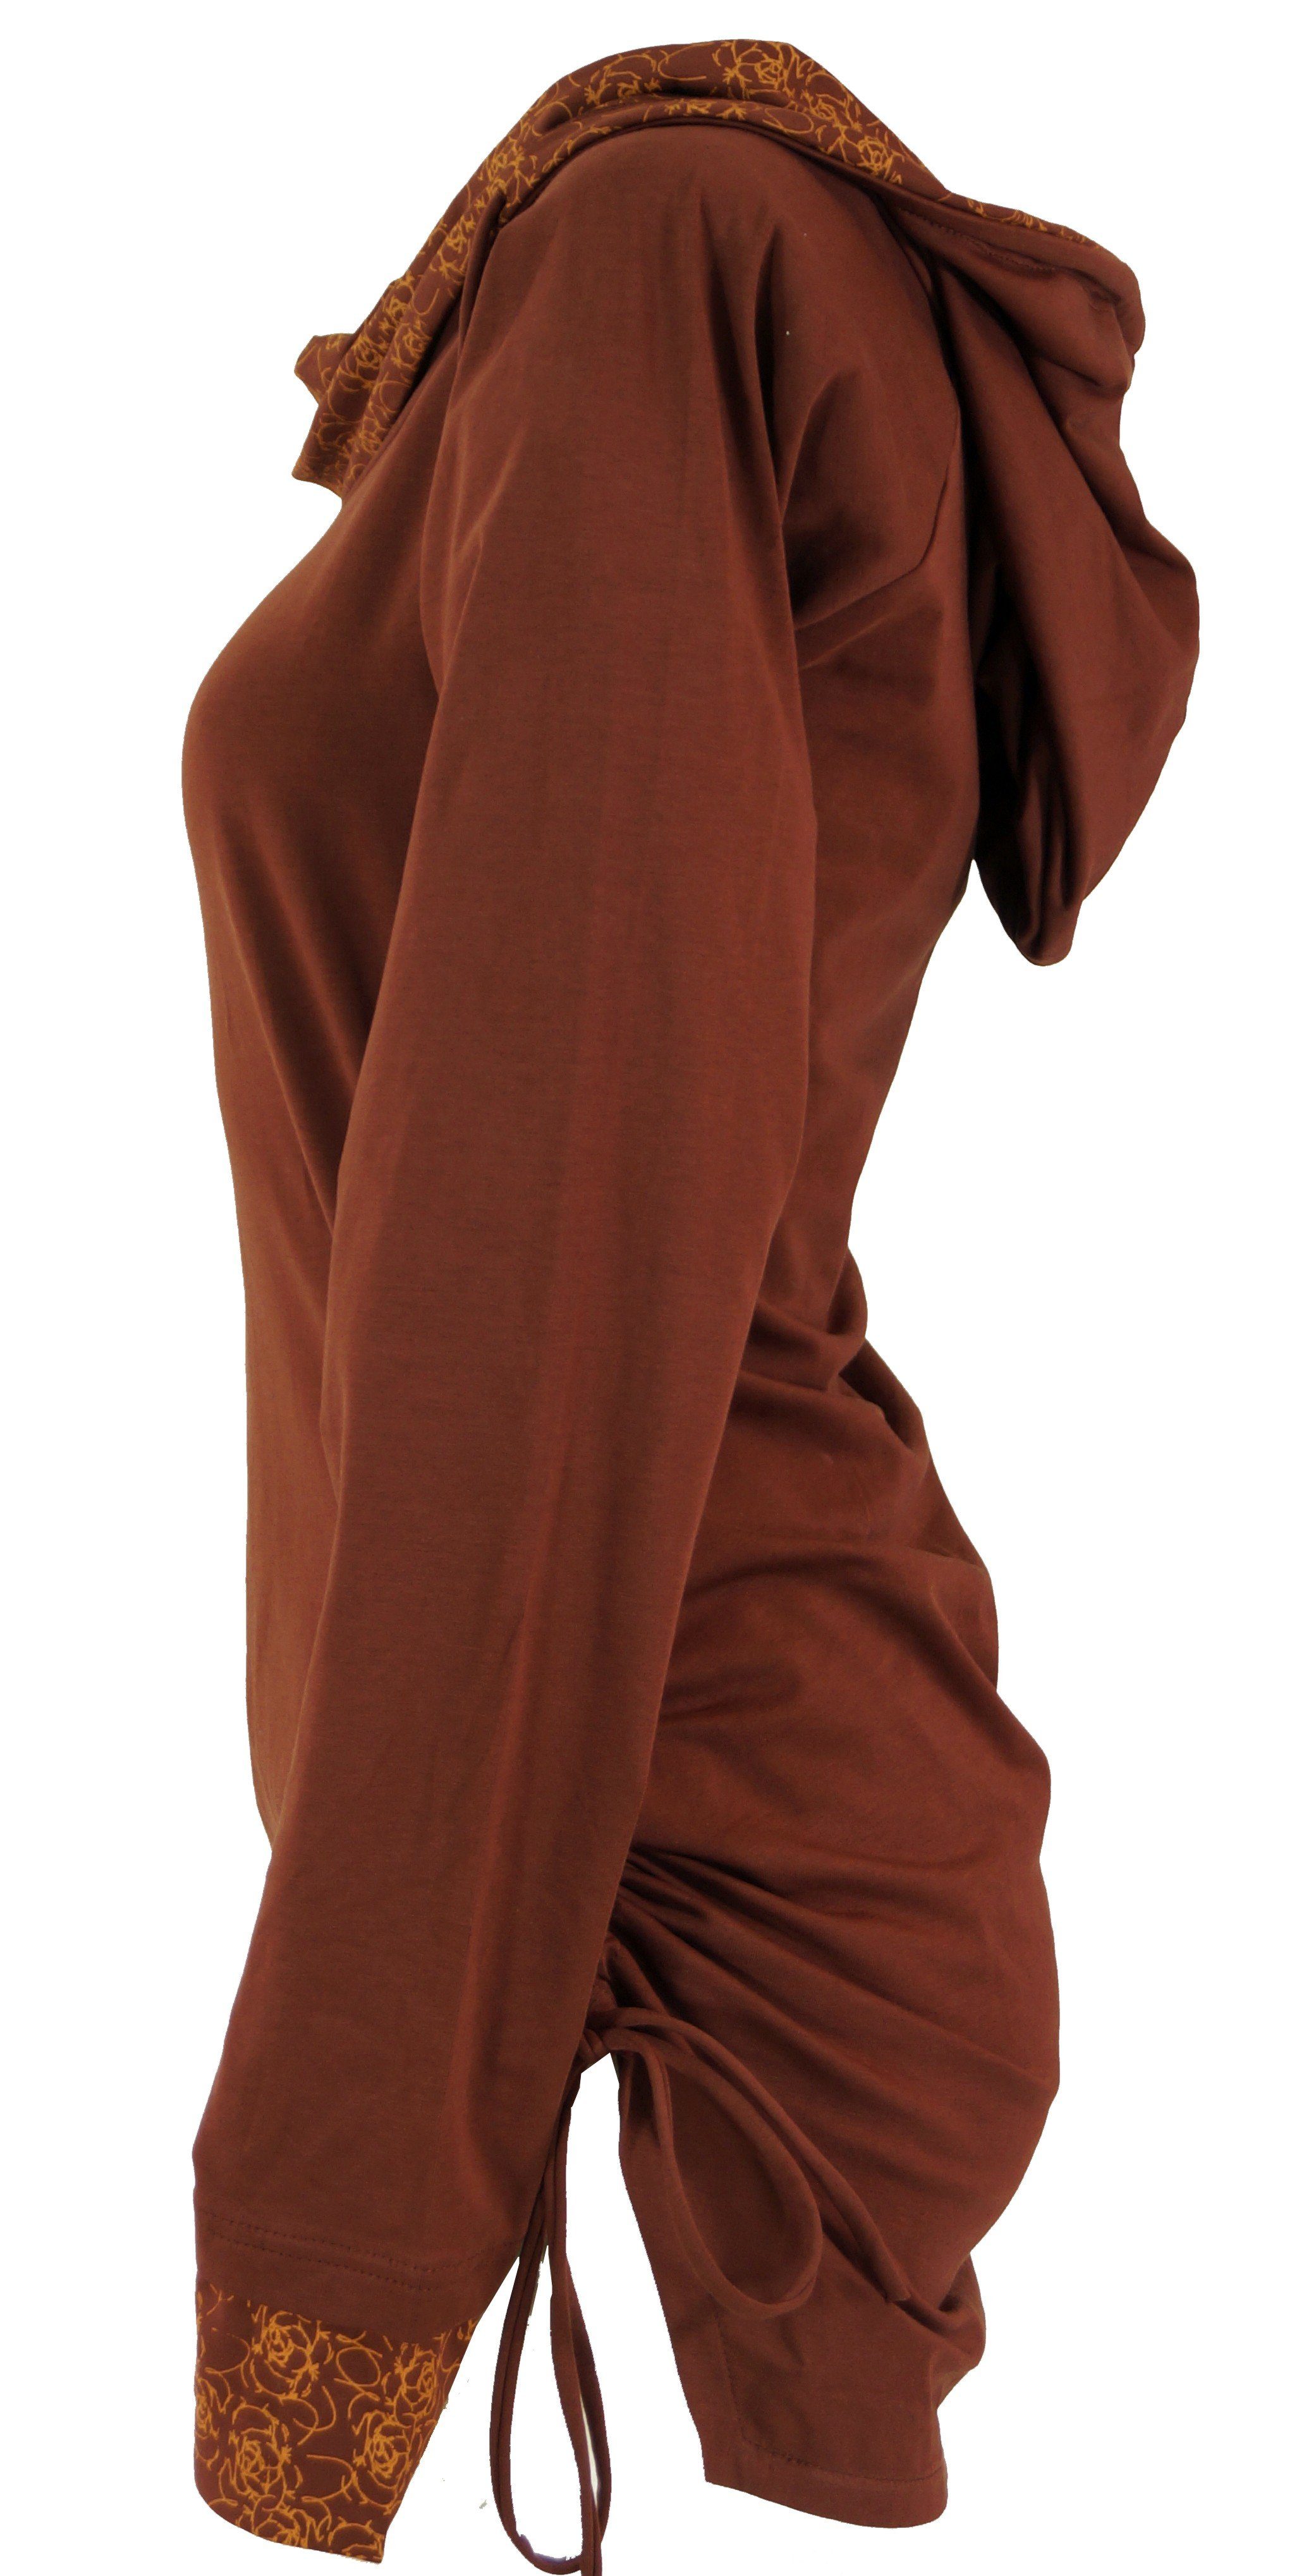 Bekleidung alternative aus Shirt.. Guru-Shop Longsleeve Bio-Baumwolle, dattelbraun/rostorange Boho Longshirt